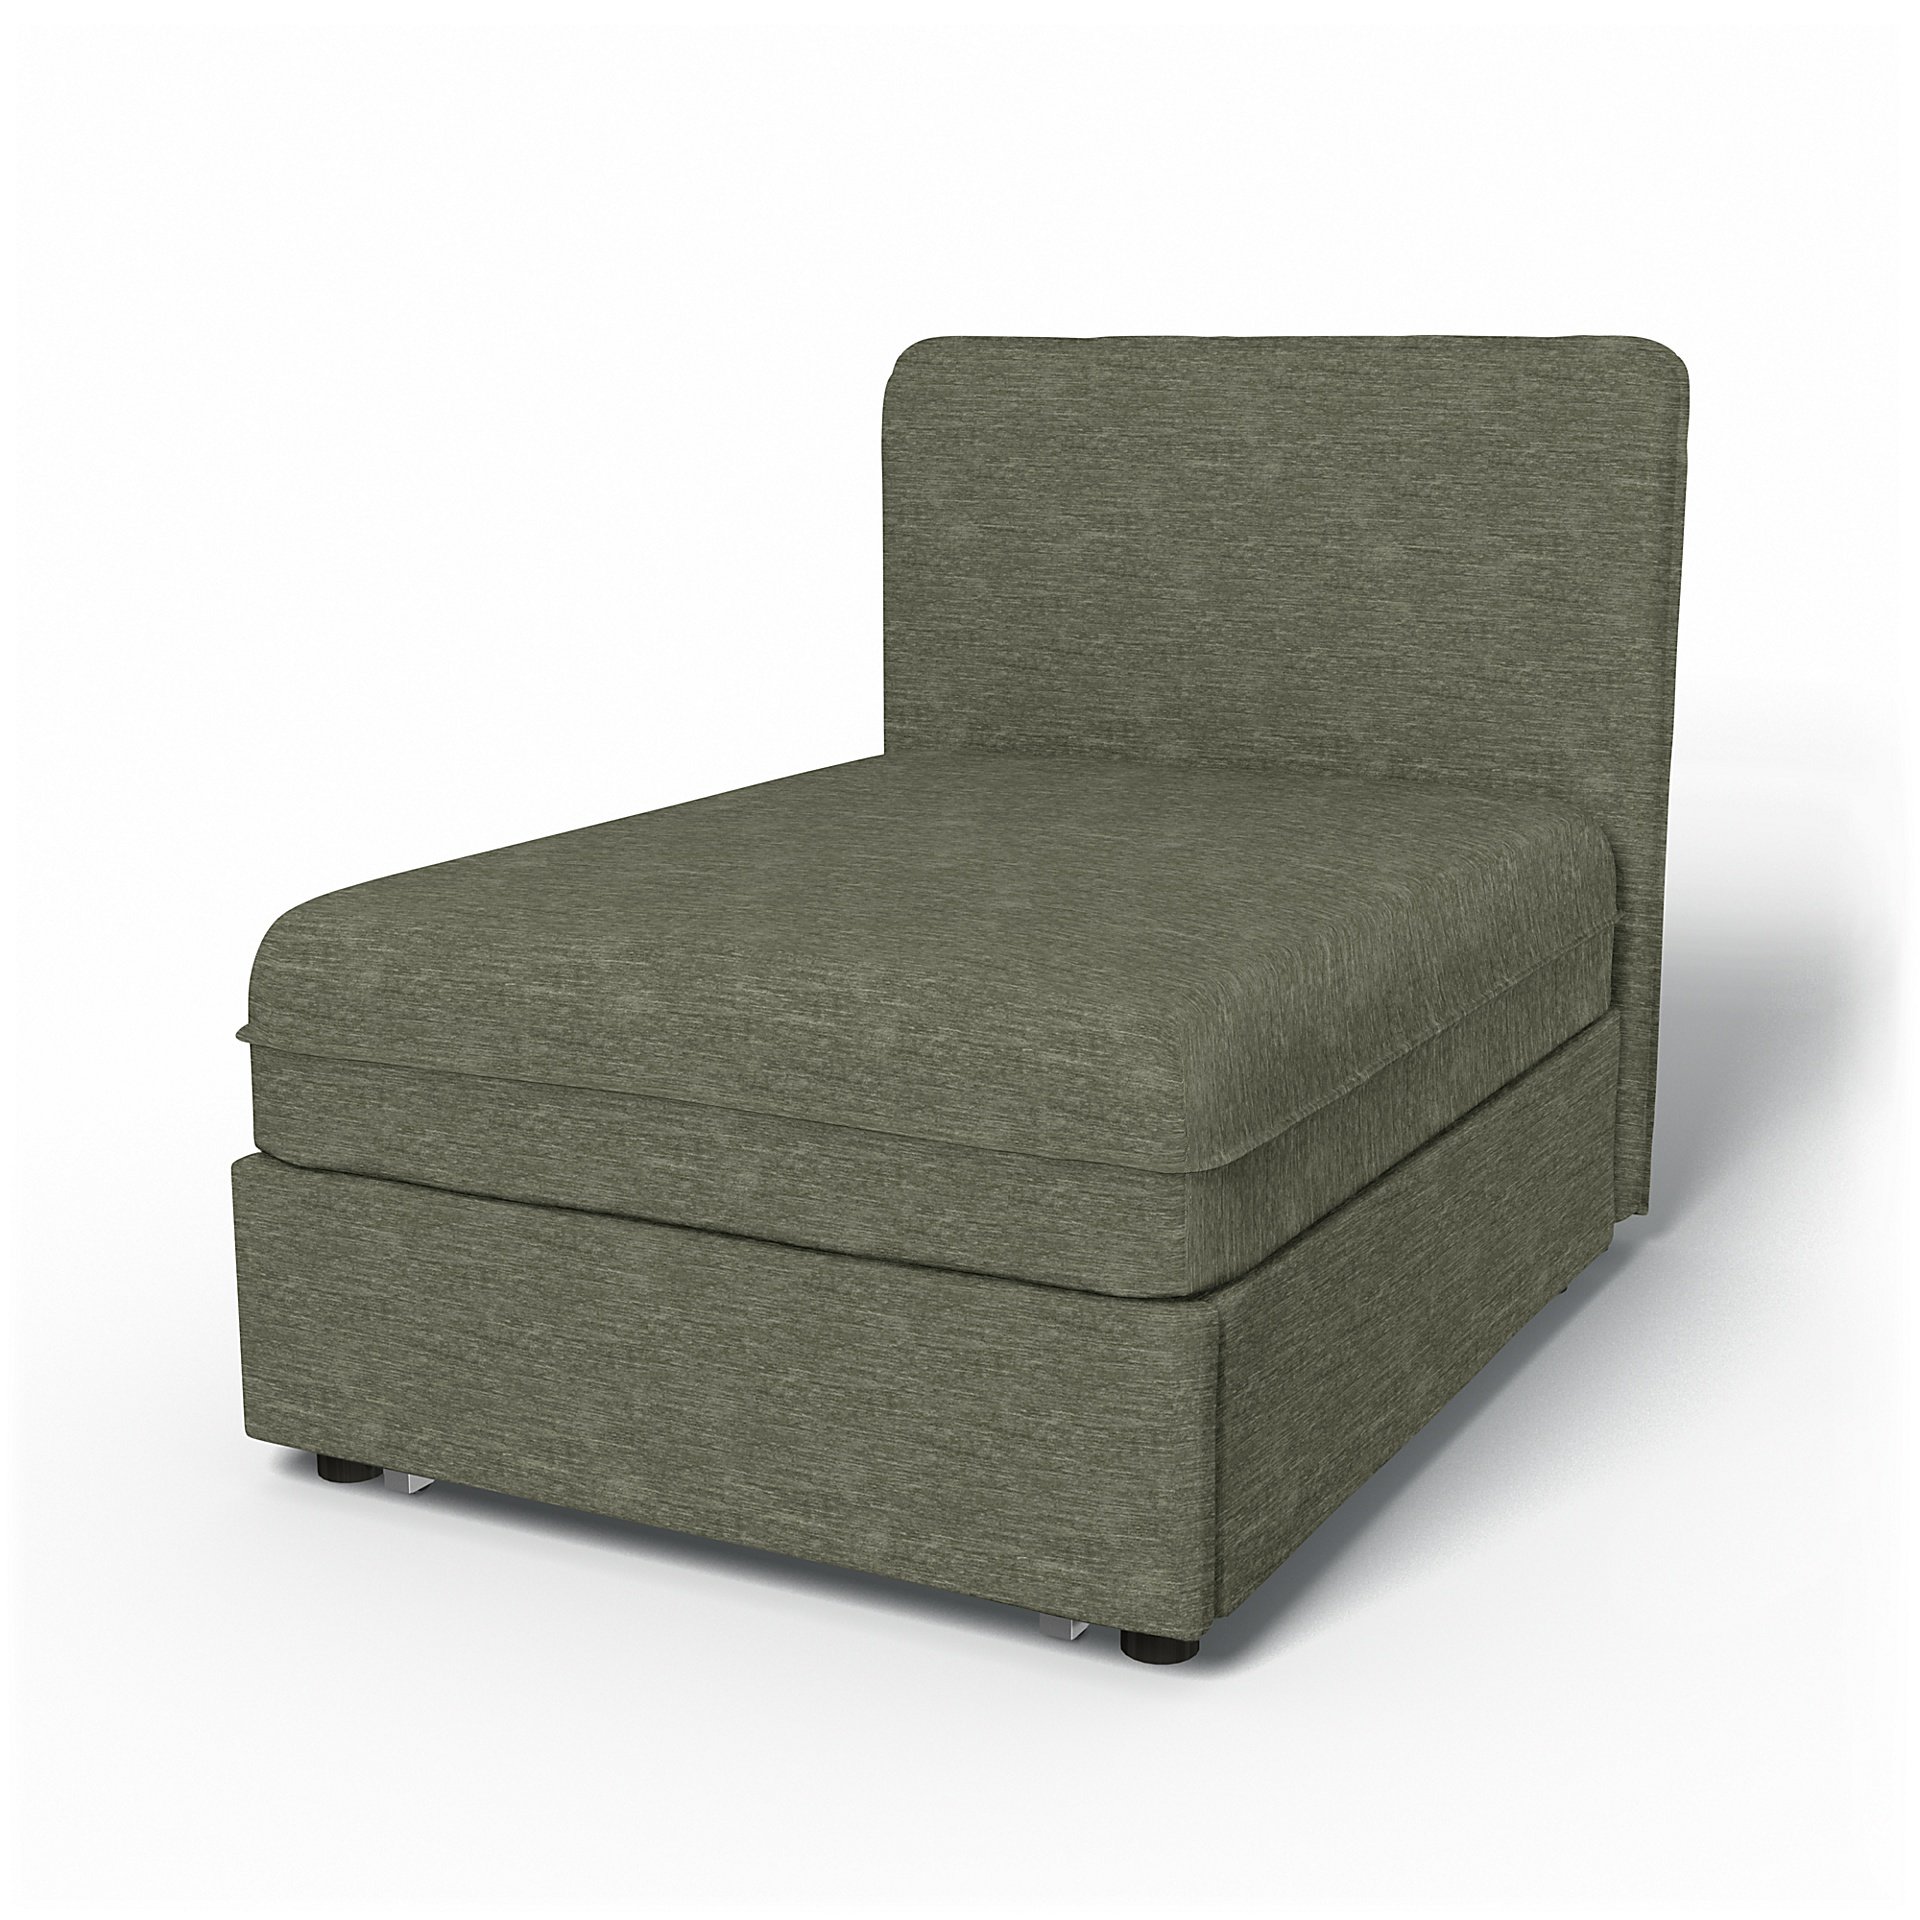 IKEA - Vallentuna Seat Module with Low Back Sofa Bed Cover 80x100 cm 32x39in, Green Grey, Velvet - B